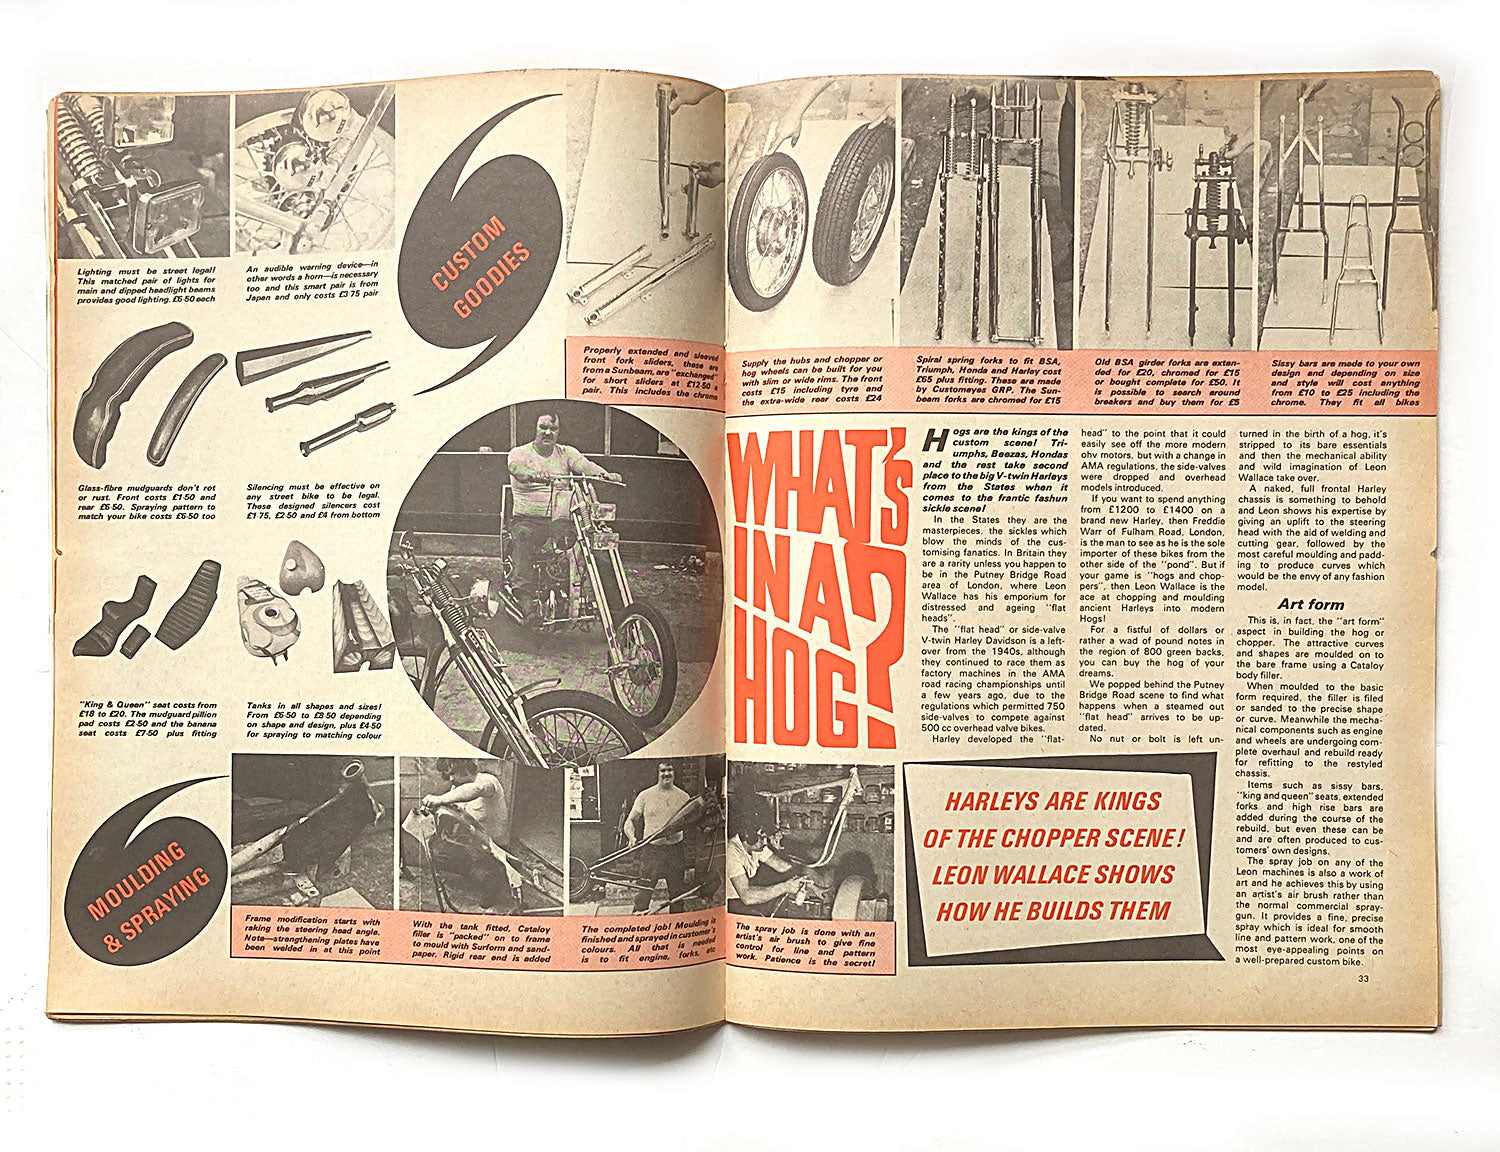 Motorcycle Mechanics magazine, October 1972